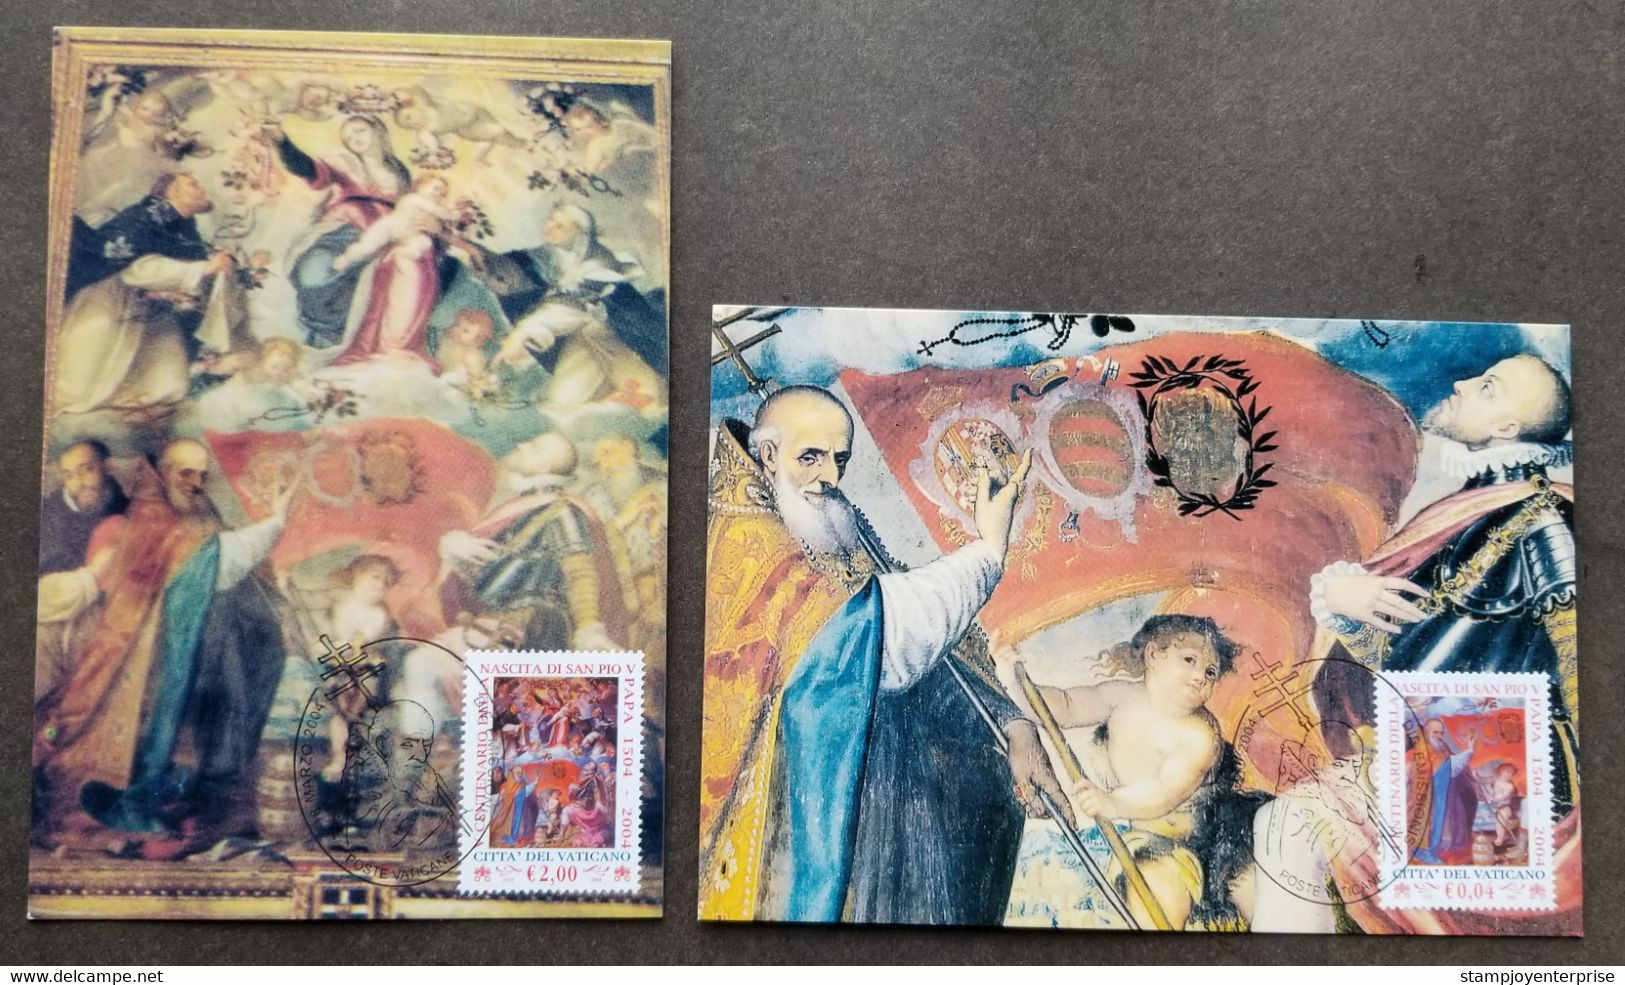 Vatican 5th Centenary Birth Of Pope Pius V 2004 Painting (maxicard) - Briefe U. Dokumente